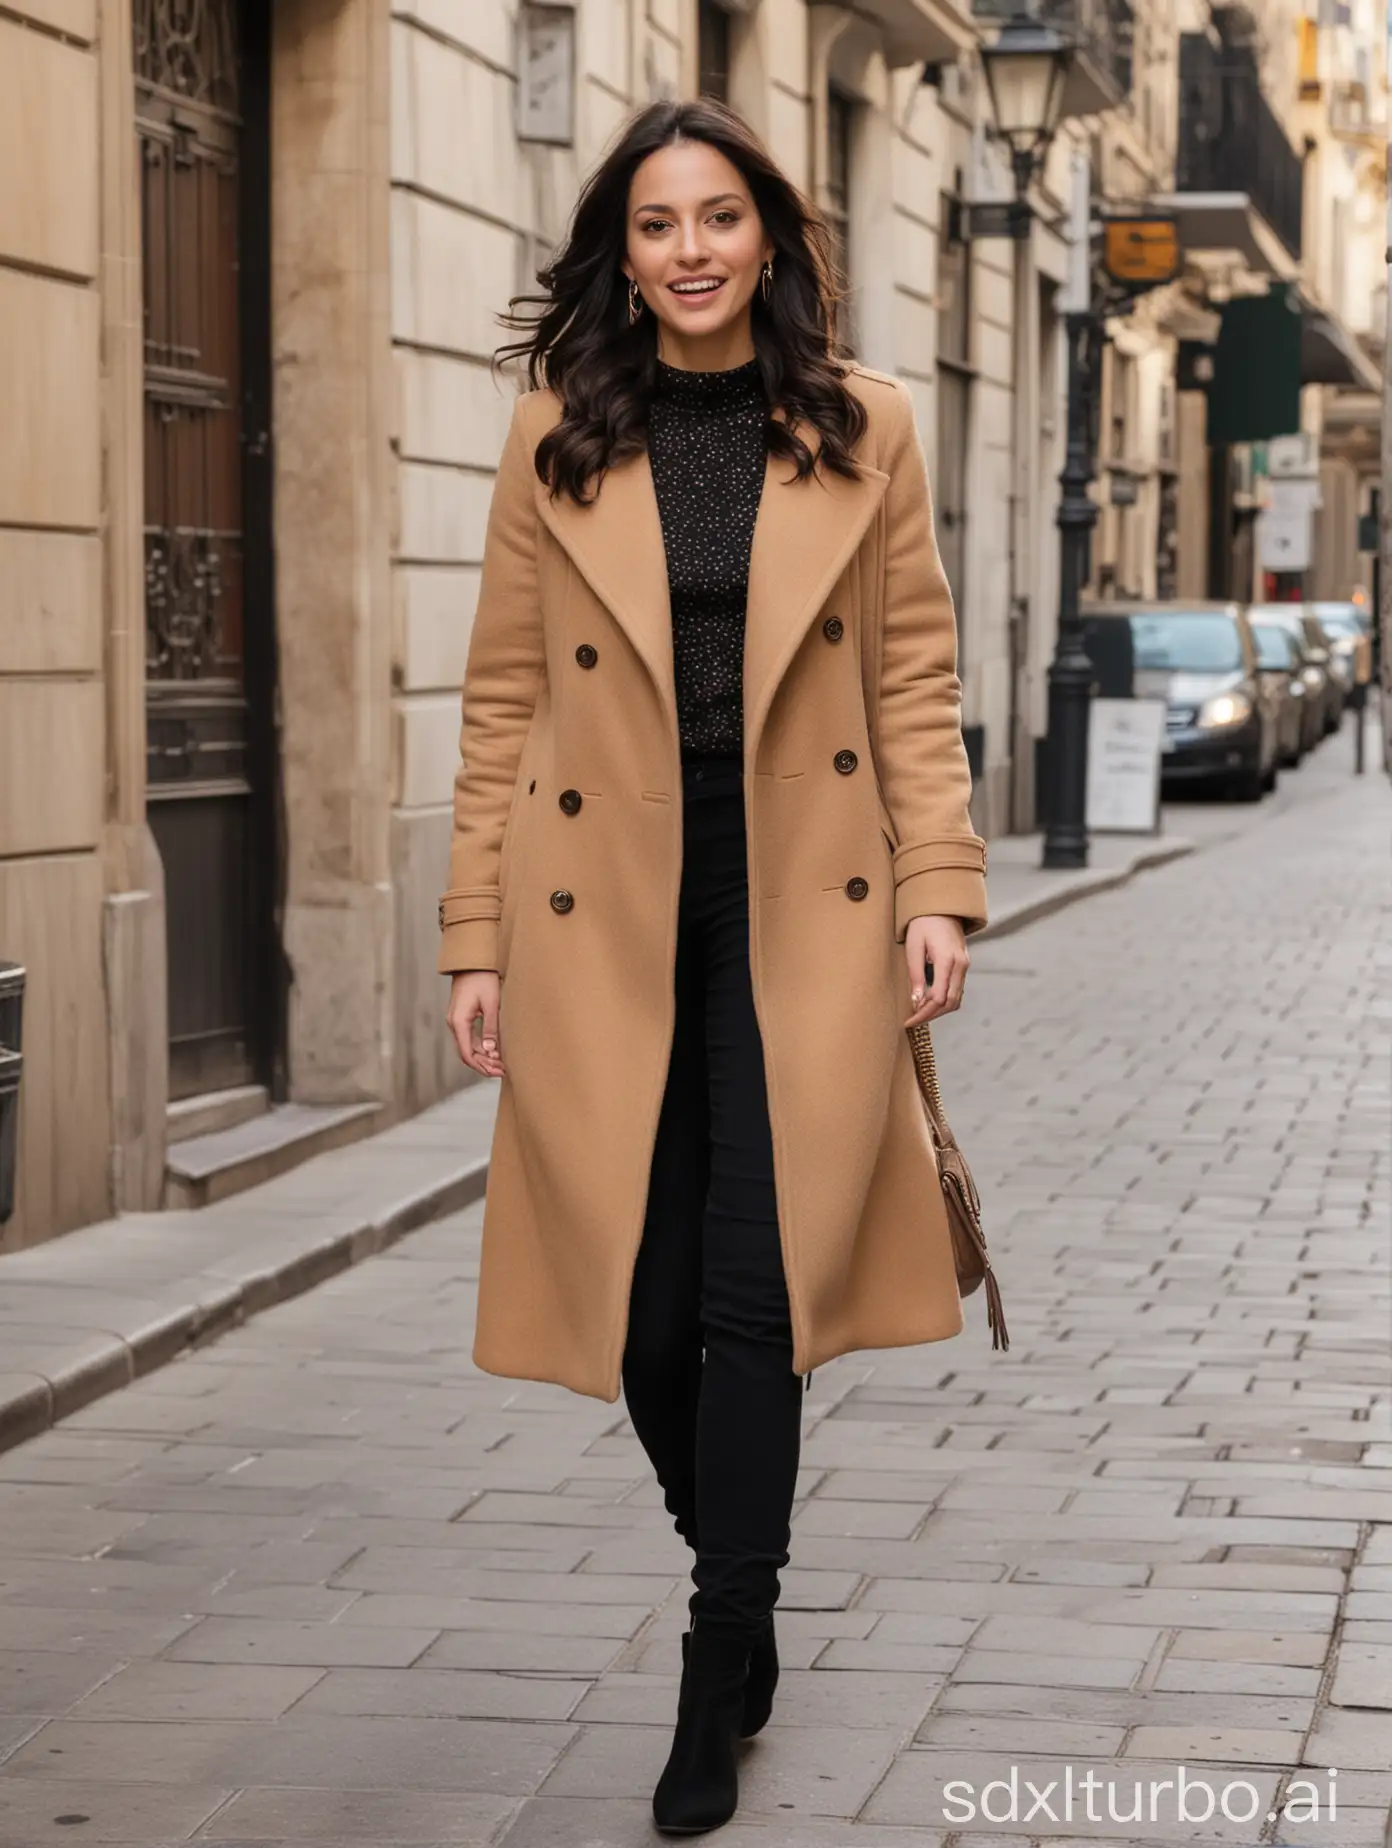 Detailed Ines Arrimadas walk on the street of December elegantly and warm dressed